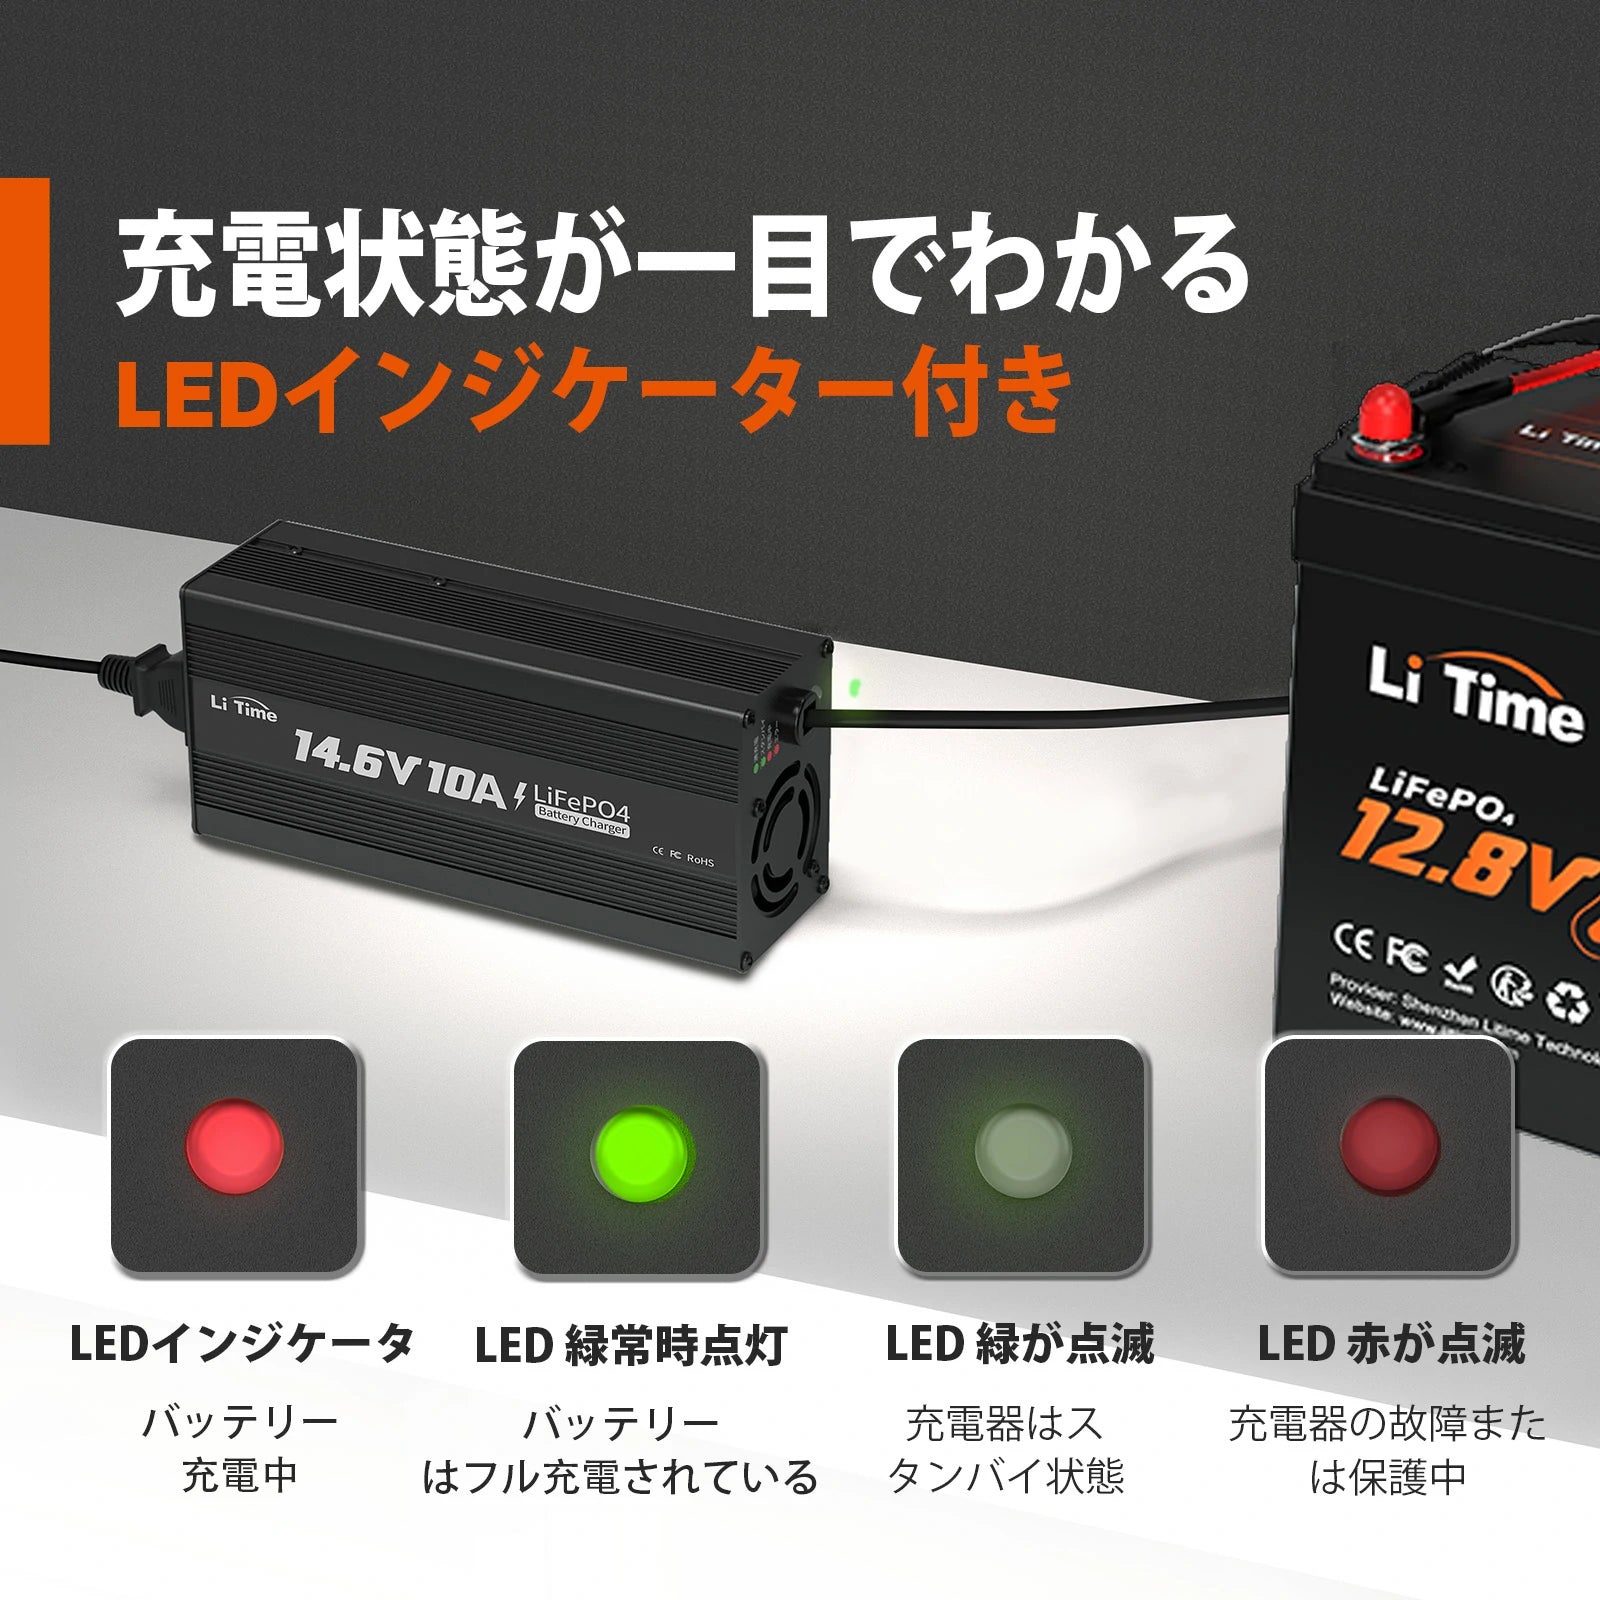 LiTime 14.6V10A リチウム イオン バッテリー 充電 器 リン酸鉄 https://jp.litime.com/products/14-6v-10a